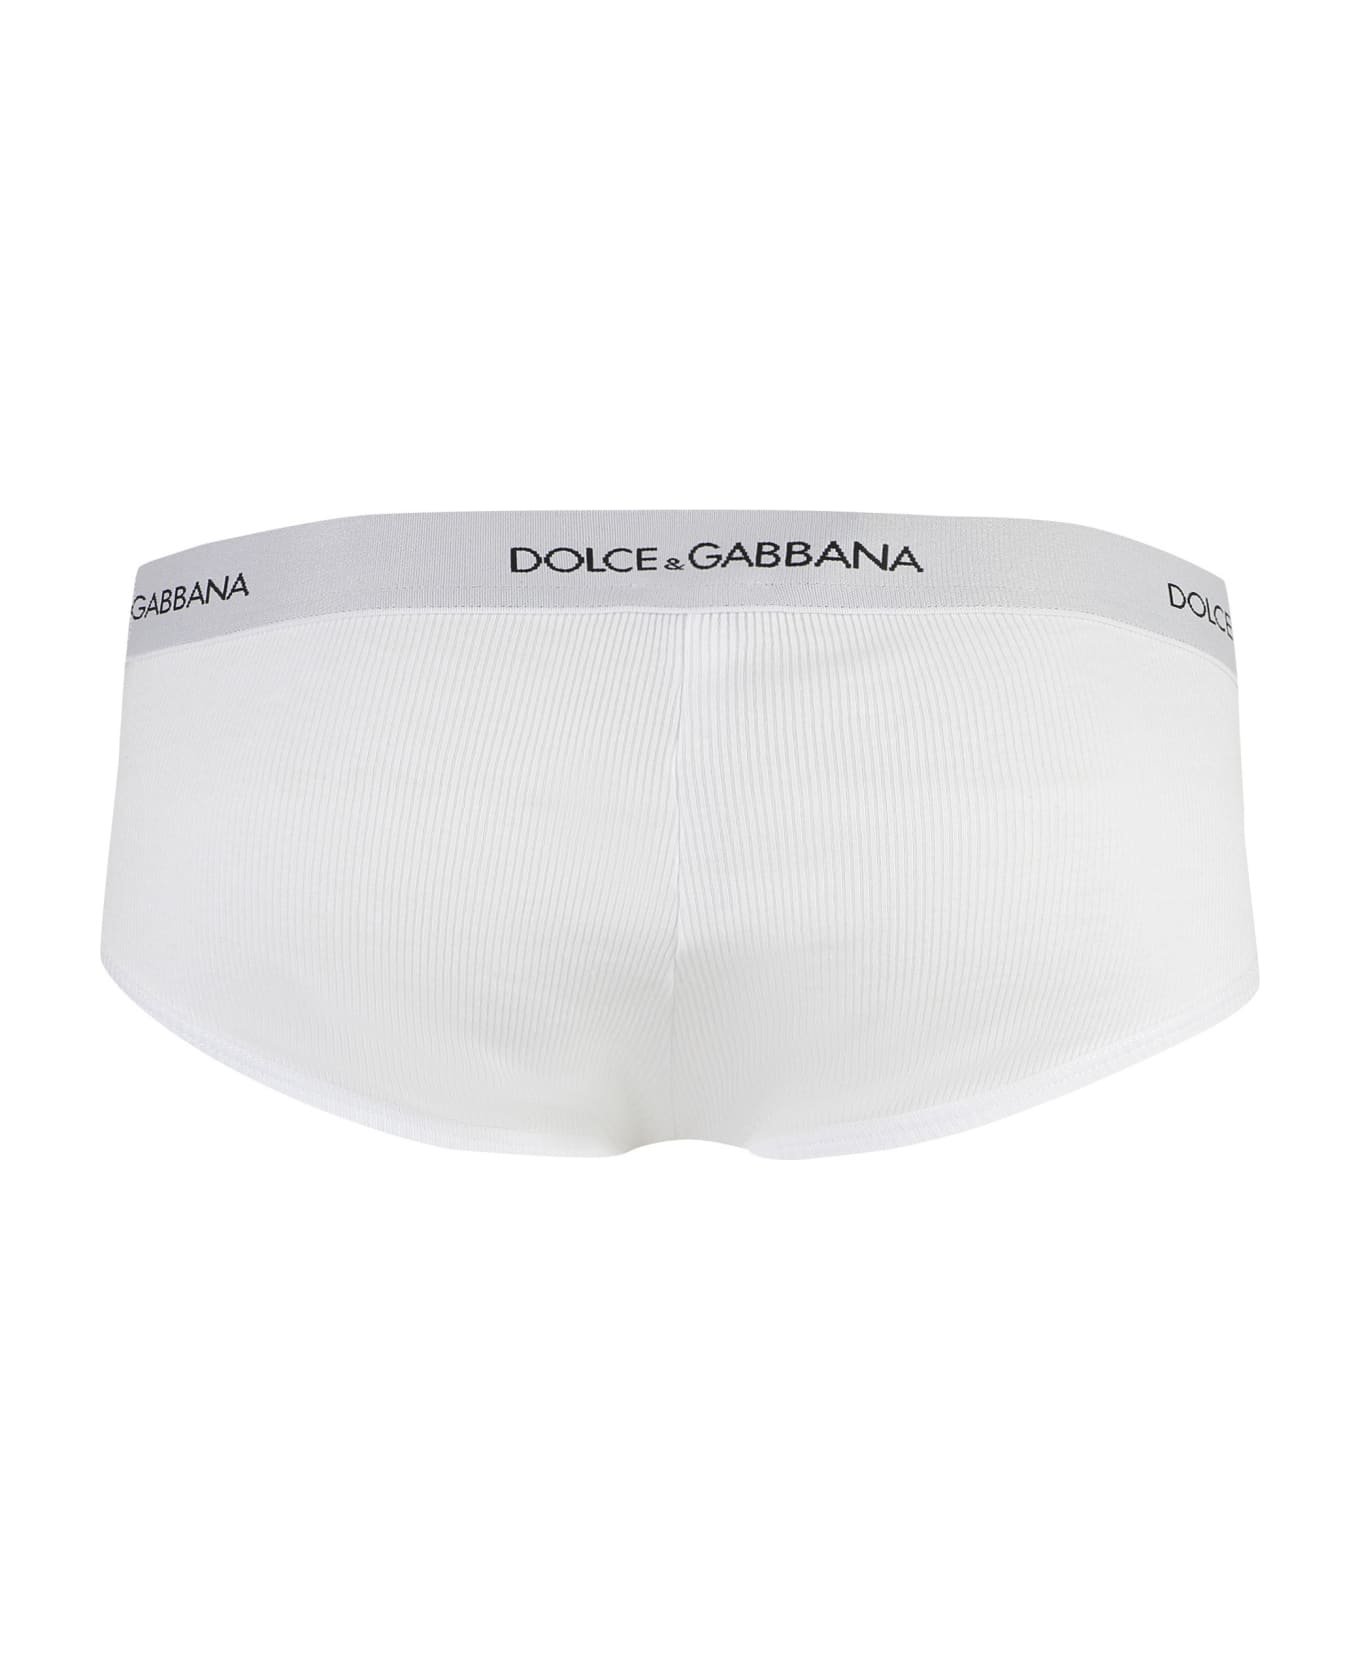 Dolce & Gabbana Plain Color Briefs - BIACO OTTICO